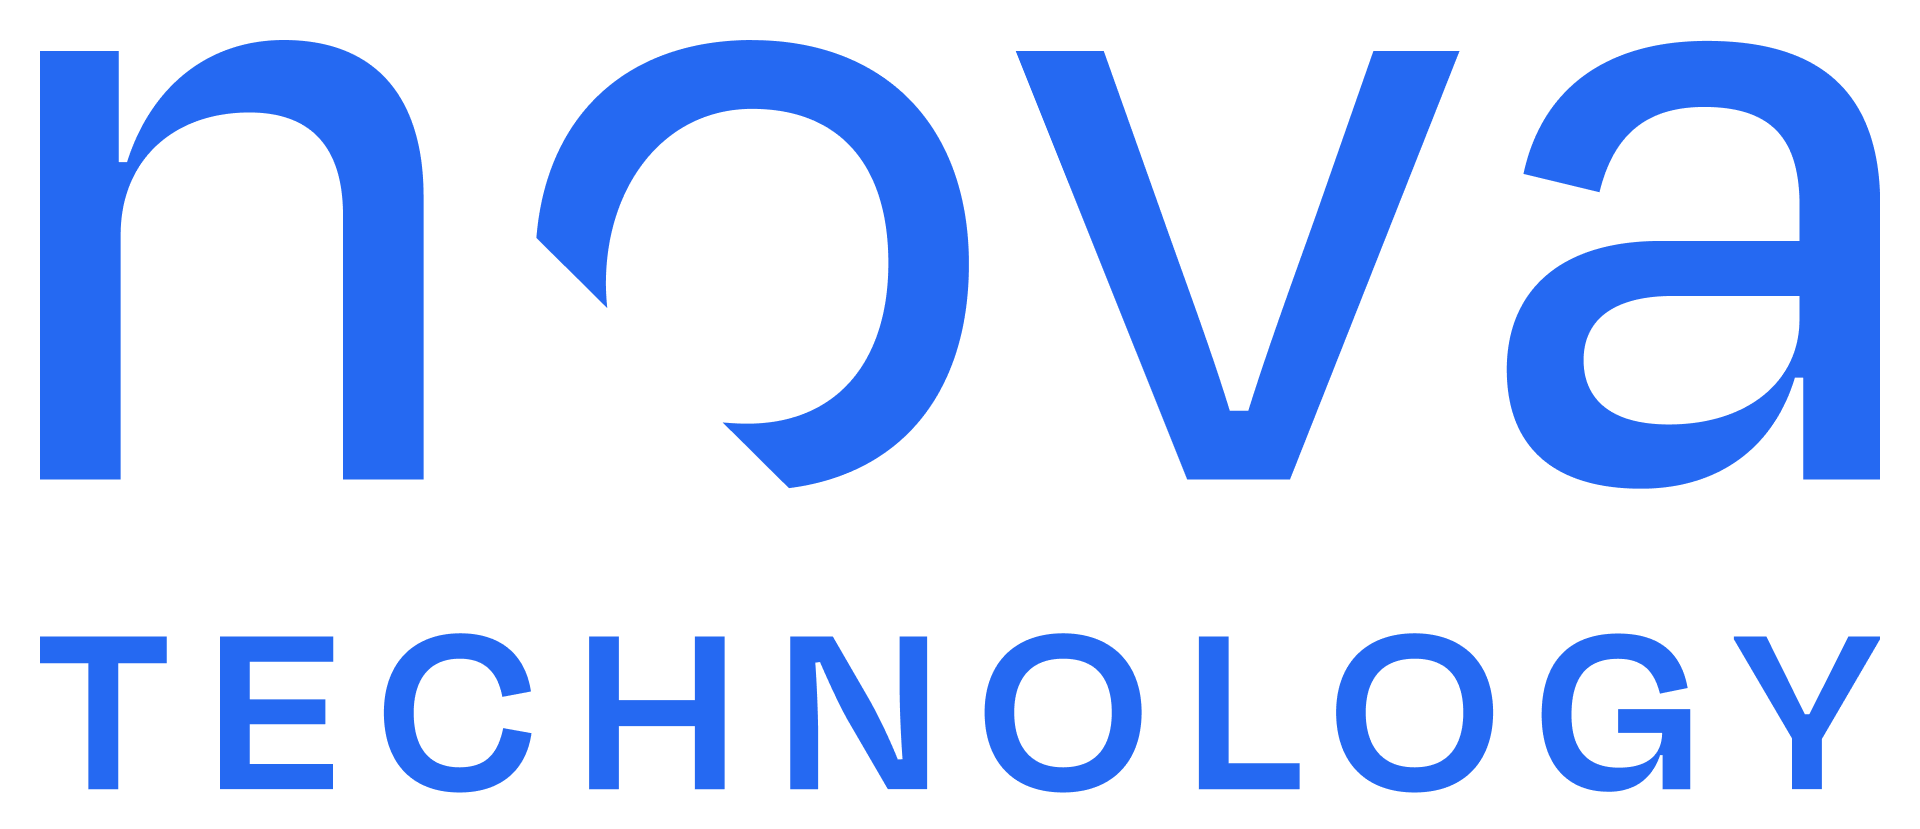 Nova Technology